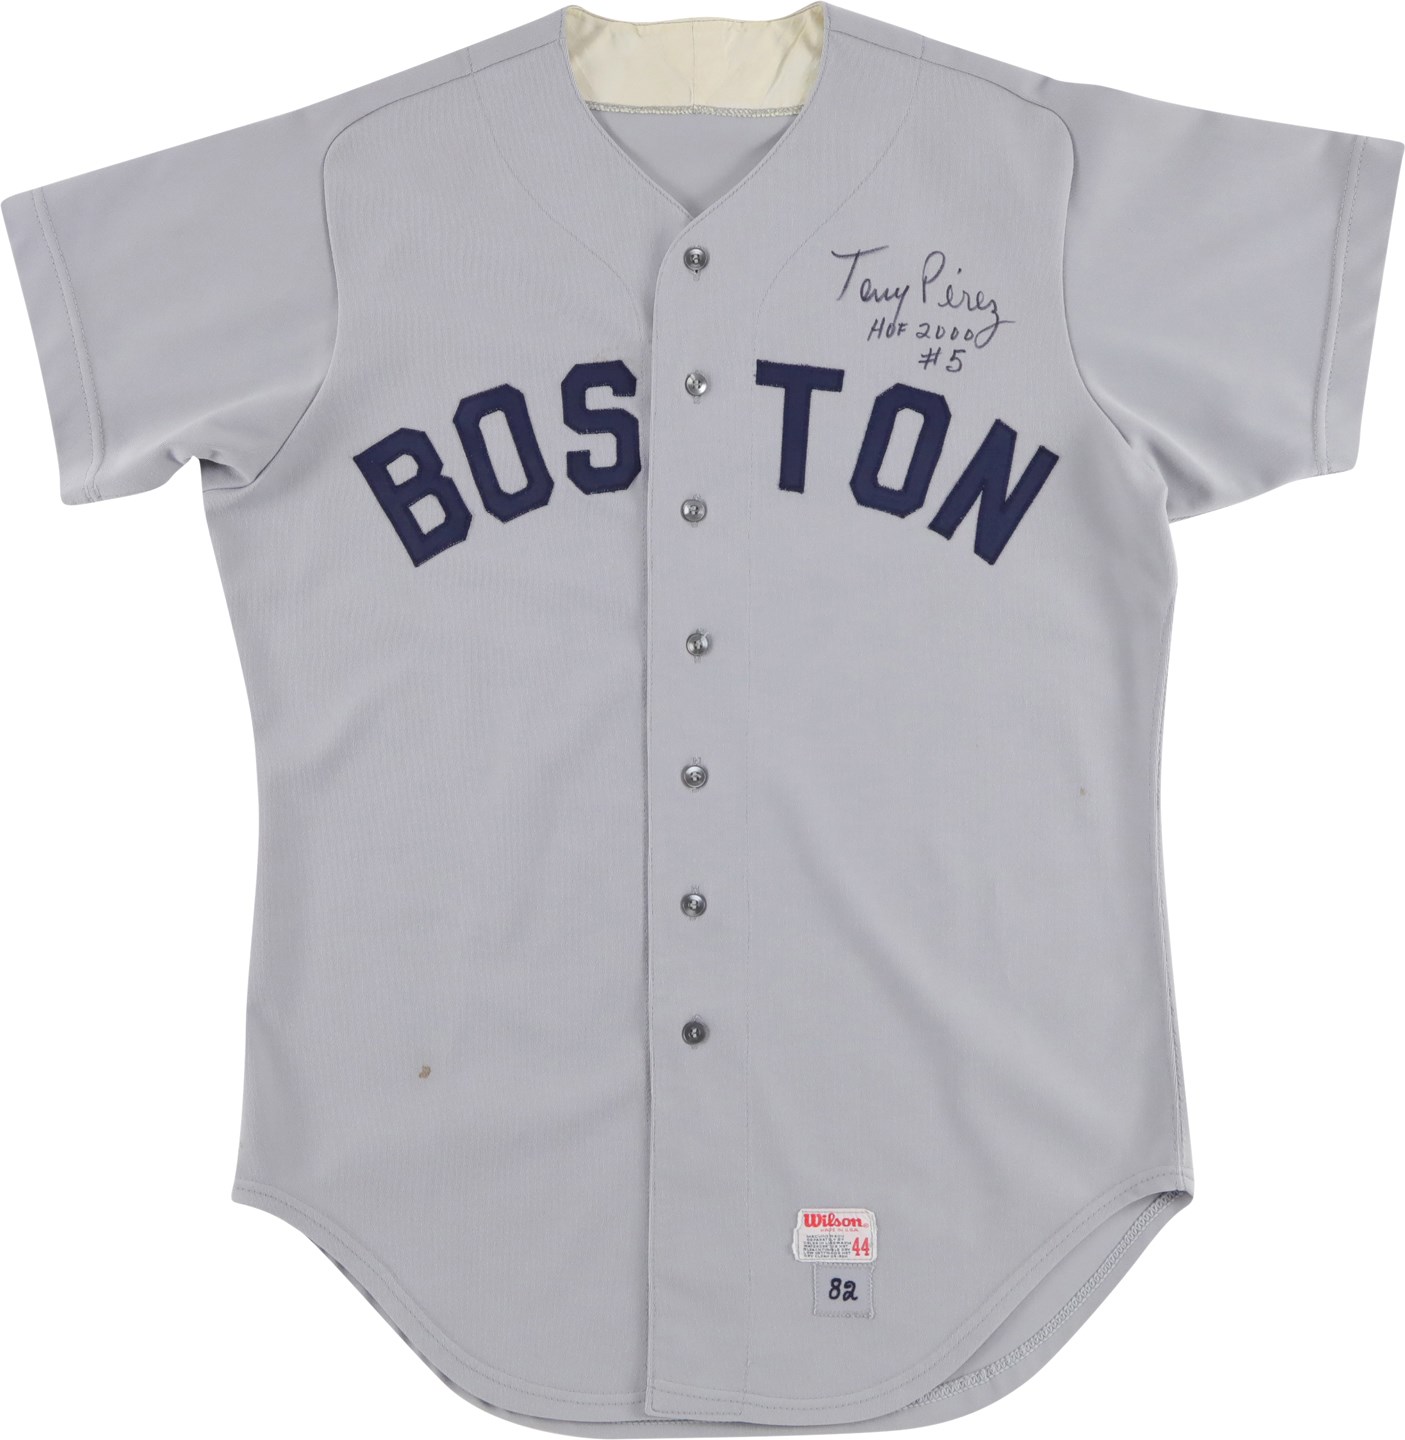 Baseball Equipment - 1982 Tony Perez Boston Red Sox Signed Game Worn Jersey